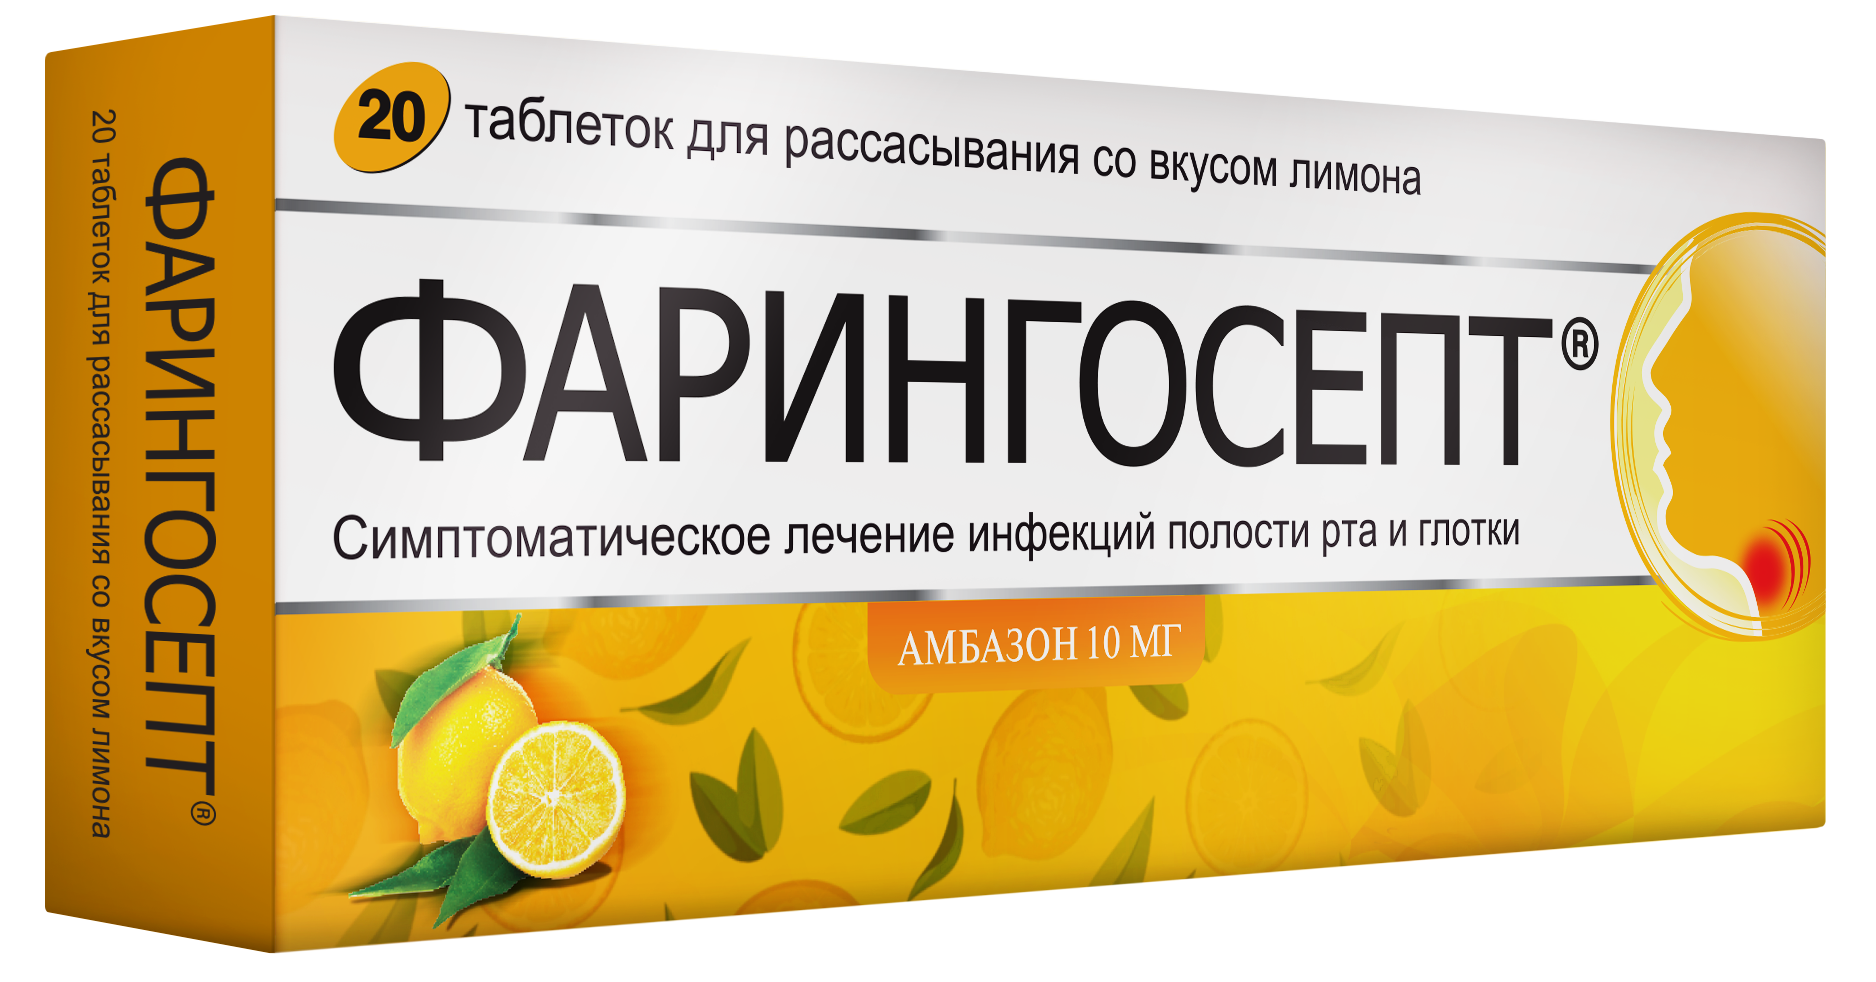 Фарингосепт, таблетки для рассасывания (лимон) 10 мг, 20 шт.